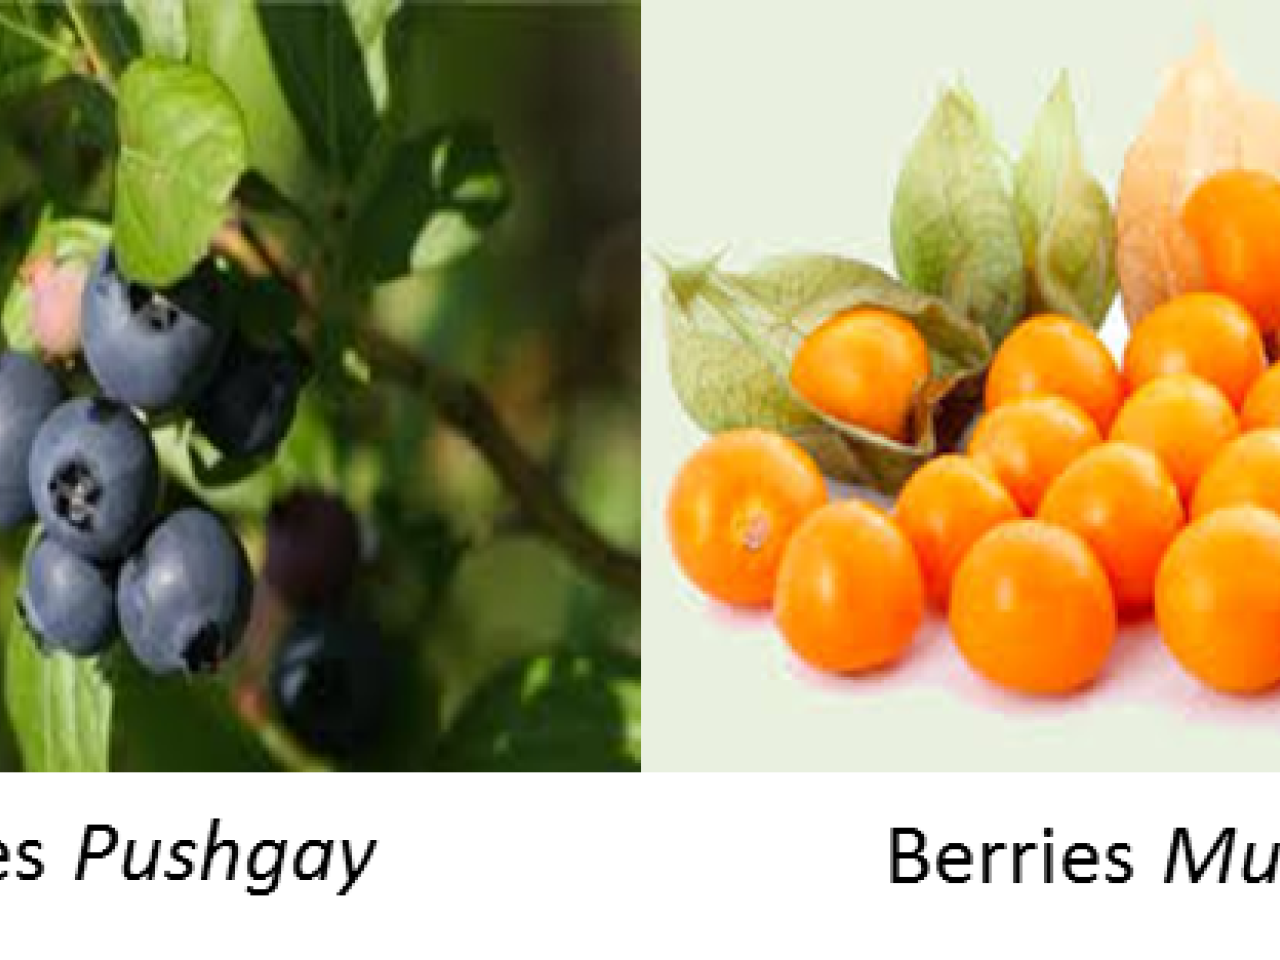 Vaccinium floribundum berries, rich in polyphenols and with known antioxidant properties